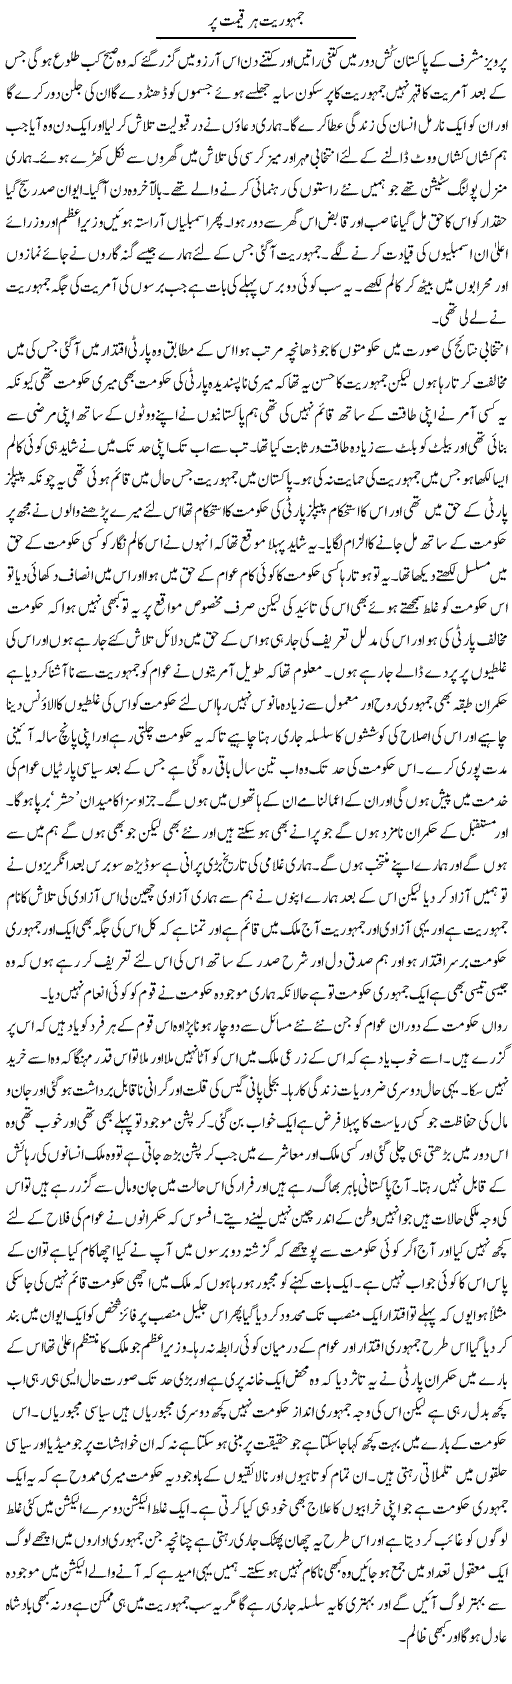 jamhoriyat har keemat Express Column Abdul Qadir 17 Feb 2010